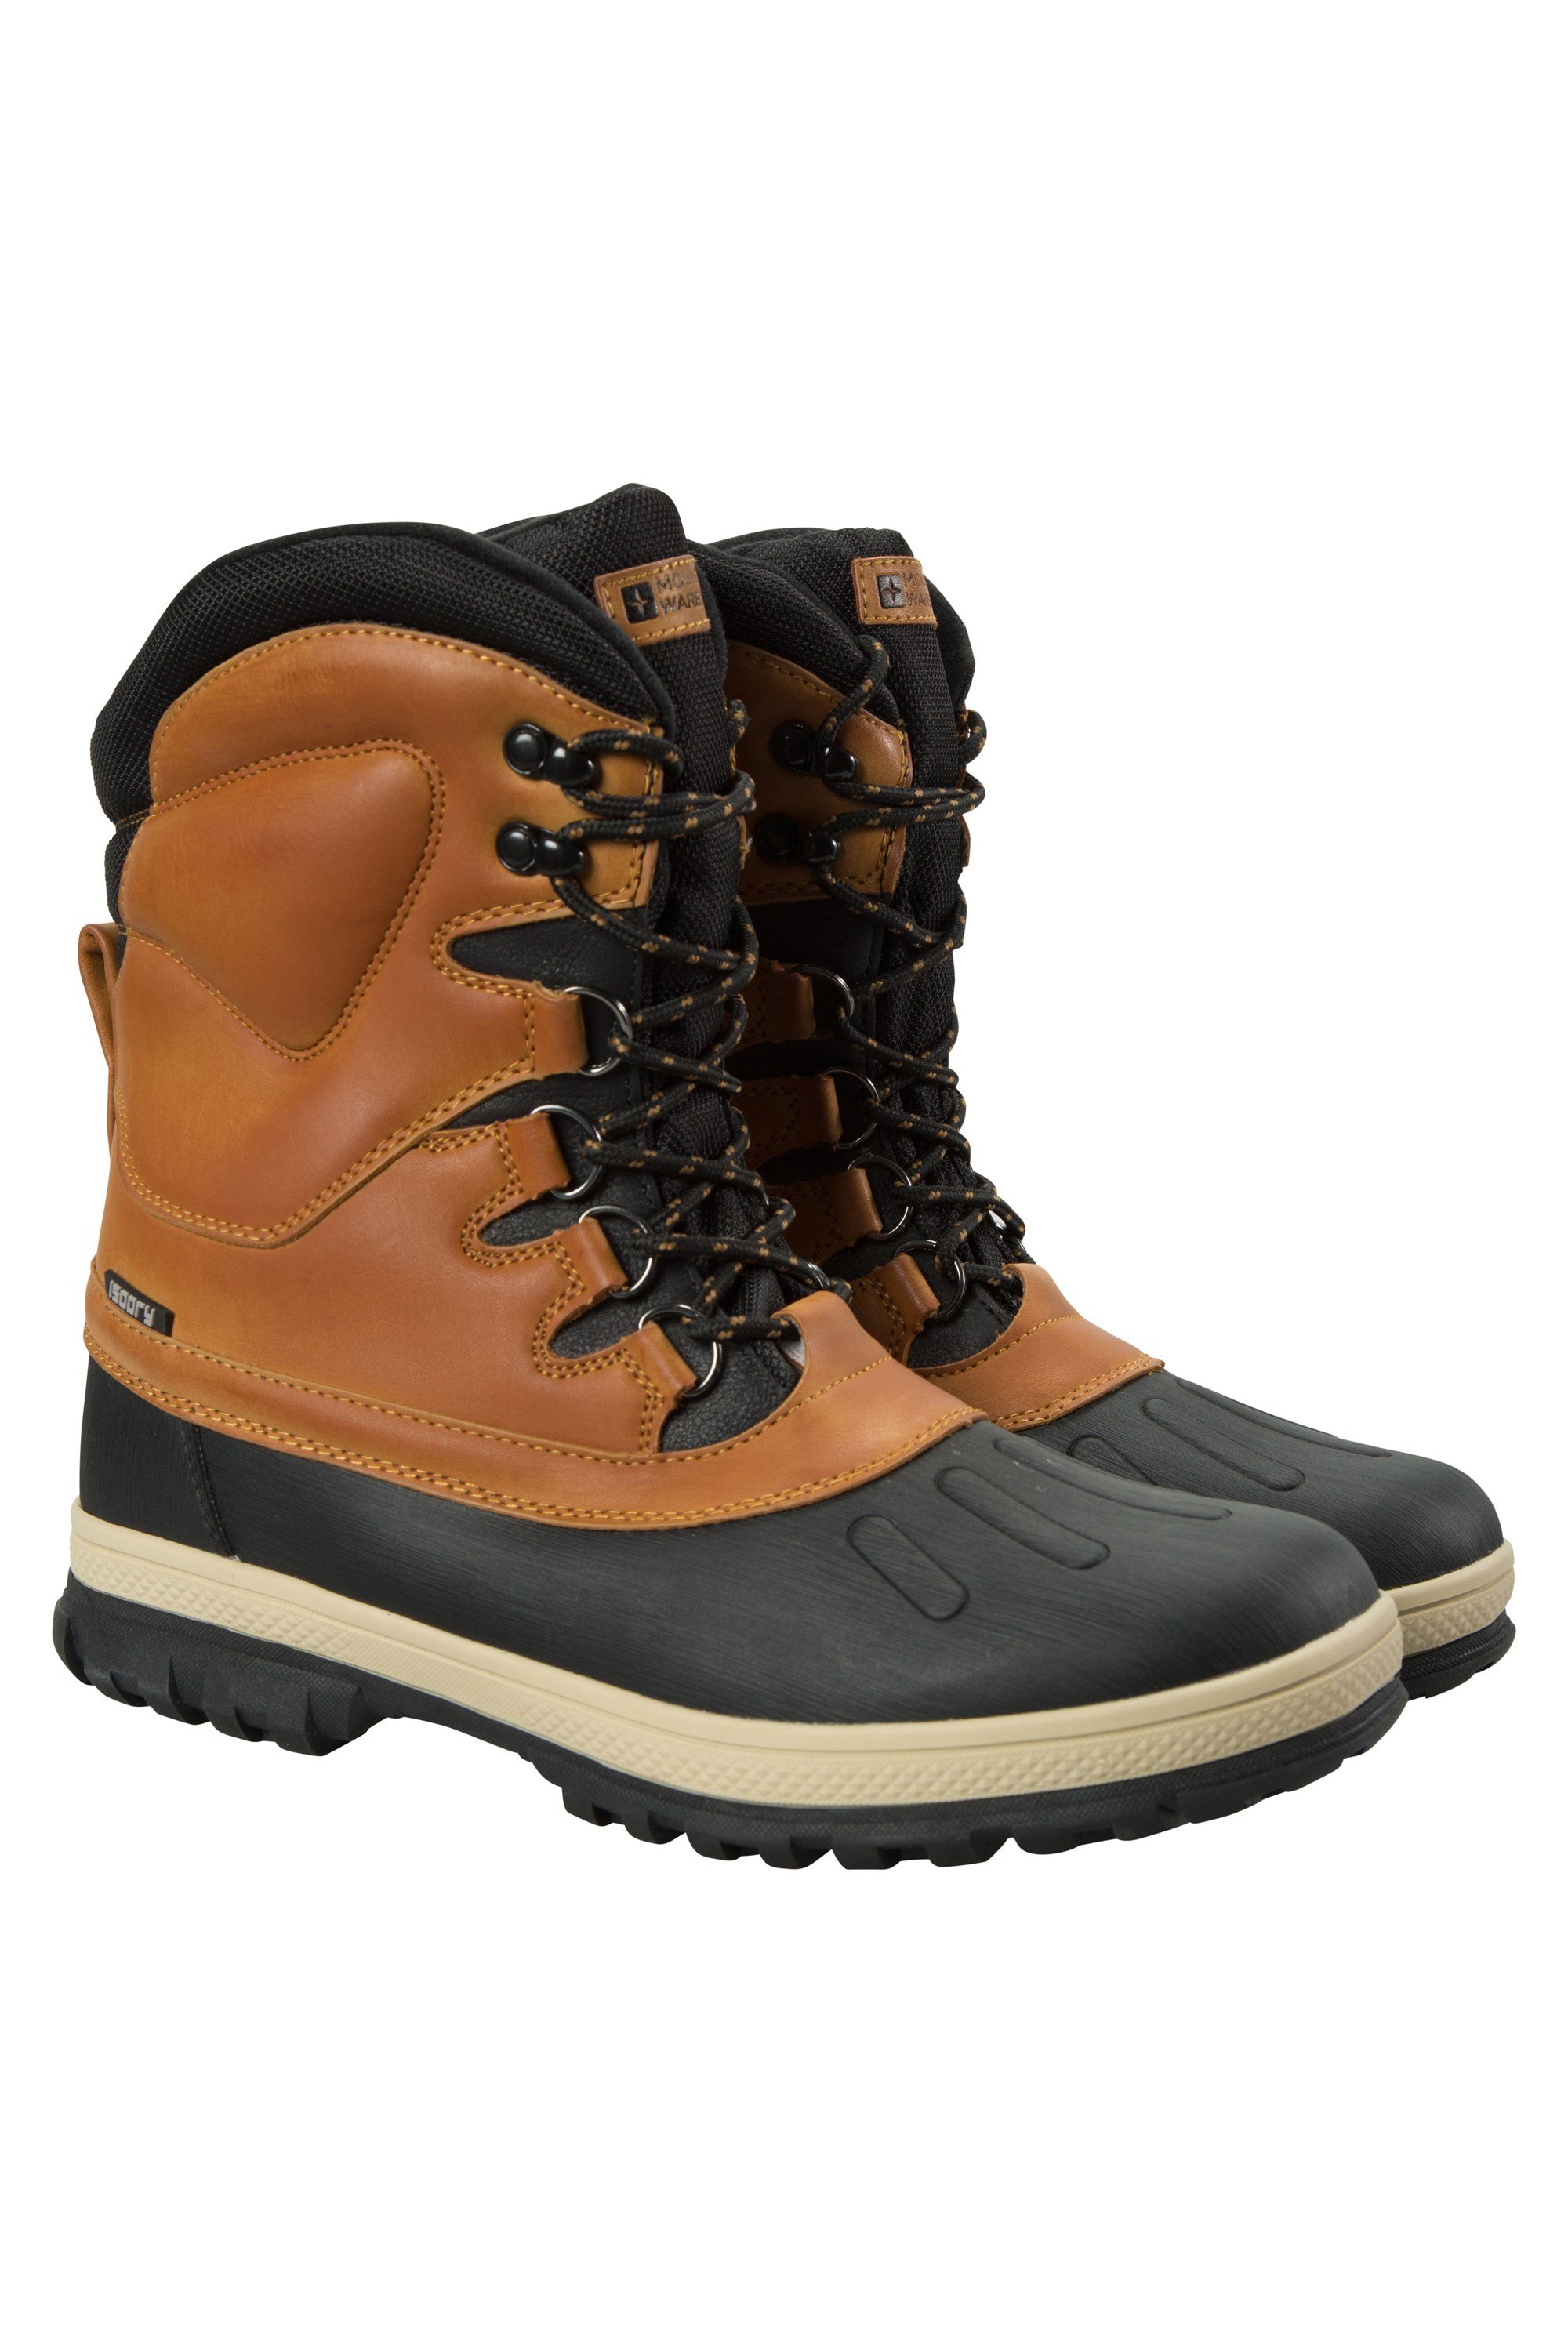 mountain warehouse extreme boots